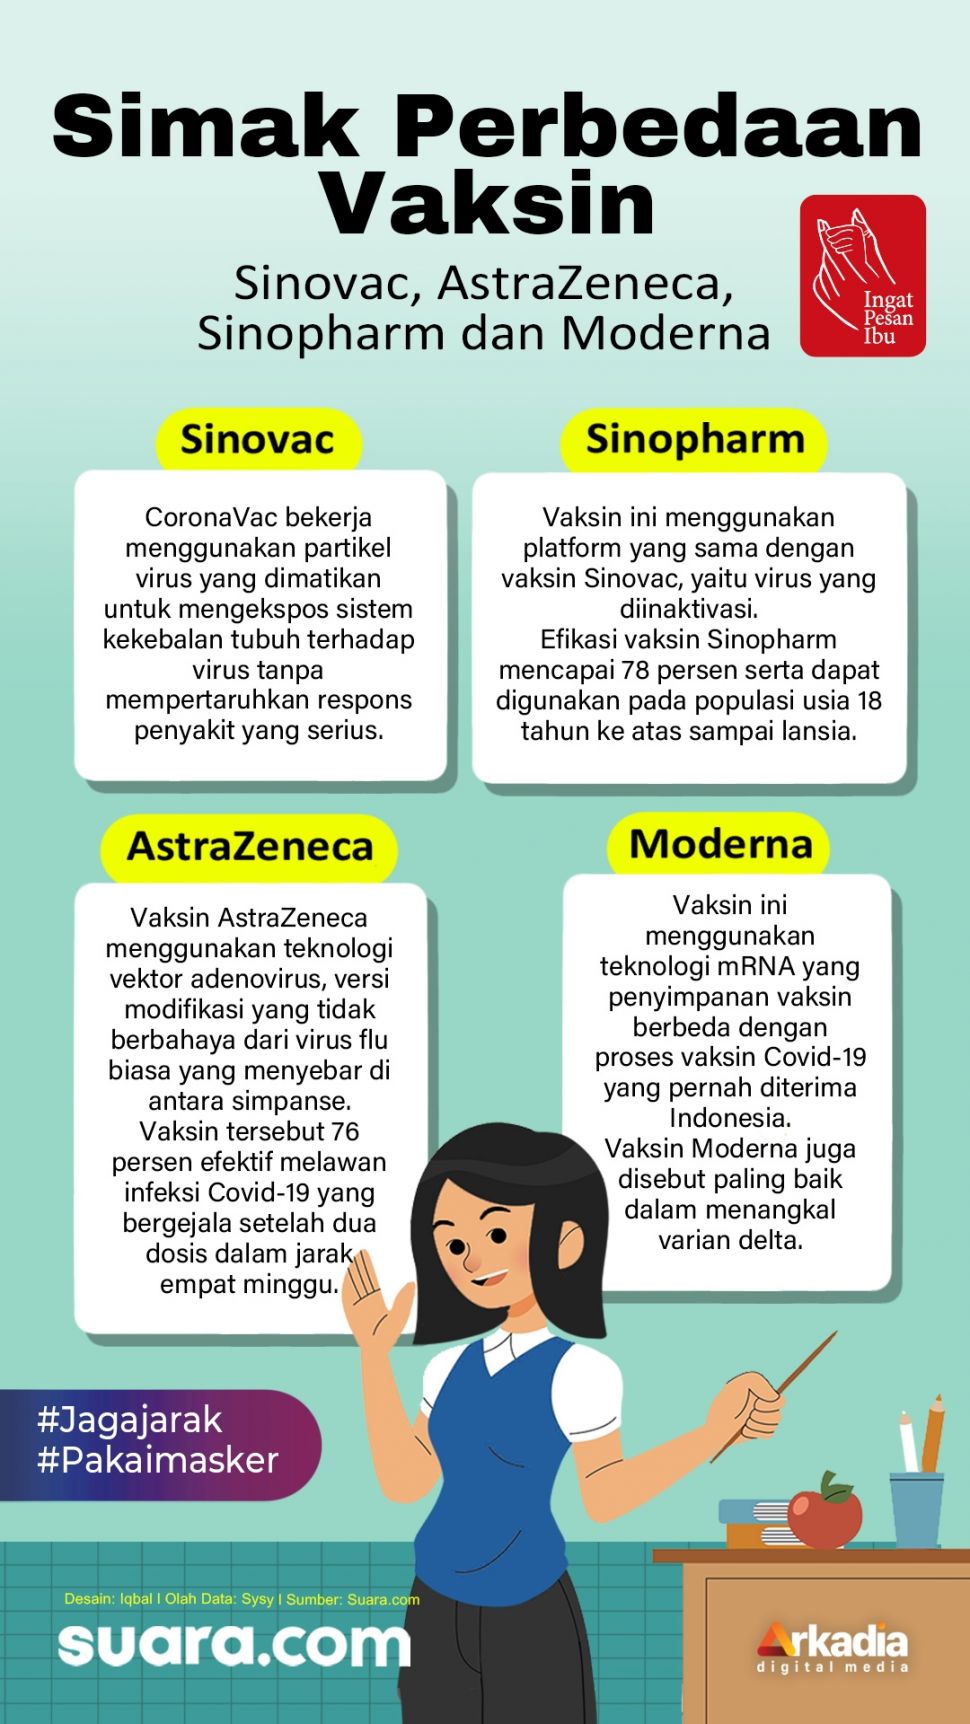 INFOGRAFIS: Simak Perbedaan Vaksin Sinovac, Sinopharm, Moderna dan AstraZeneca!